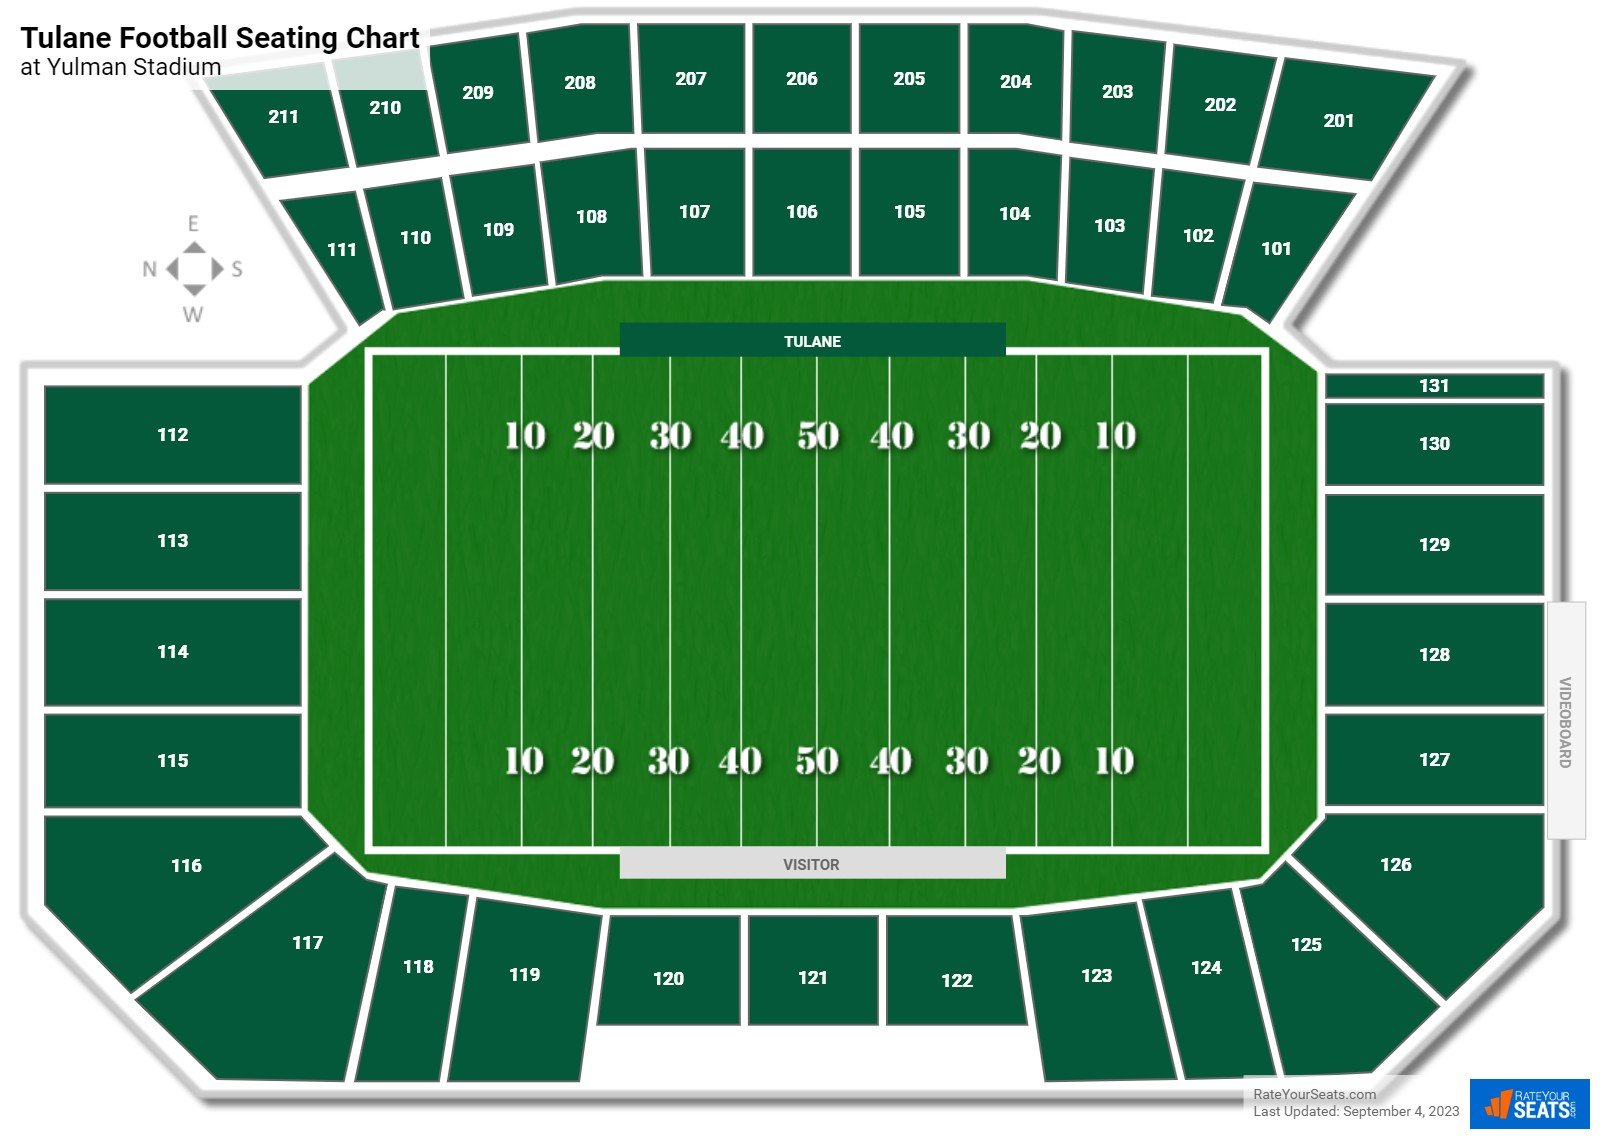 Tulane Green Wave Seating Chart at Yulman Stadium